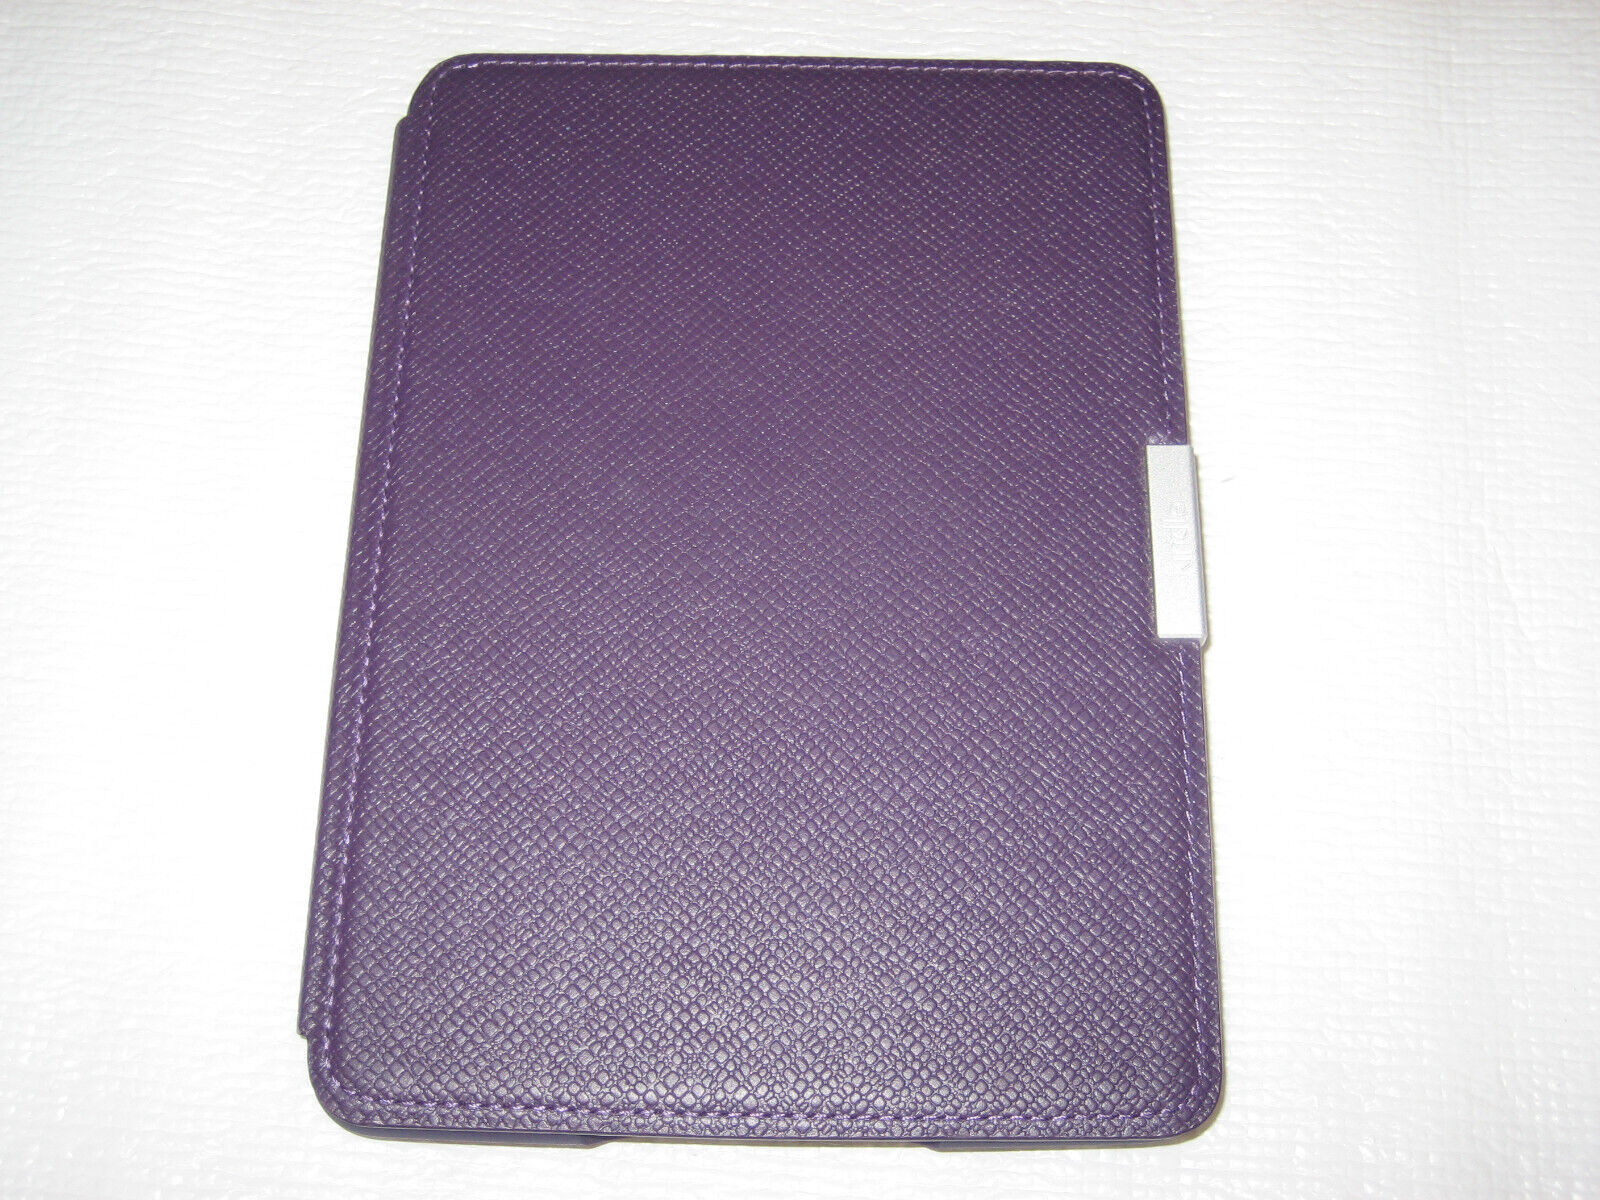 Original Amazon Purple Leather Cover Case for Kindle Paperwhite 5th,6th, 7th Gen